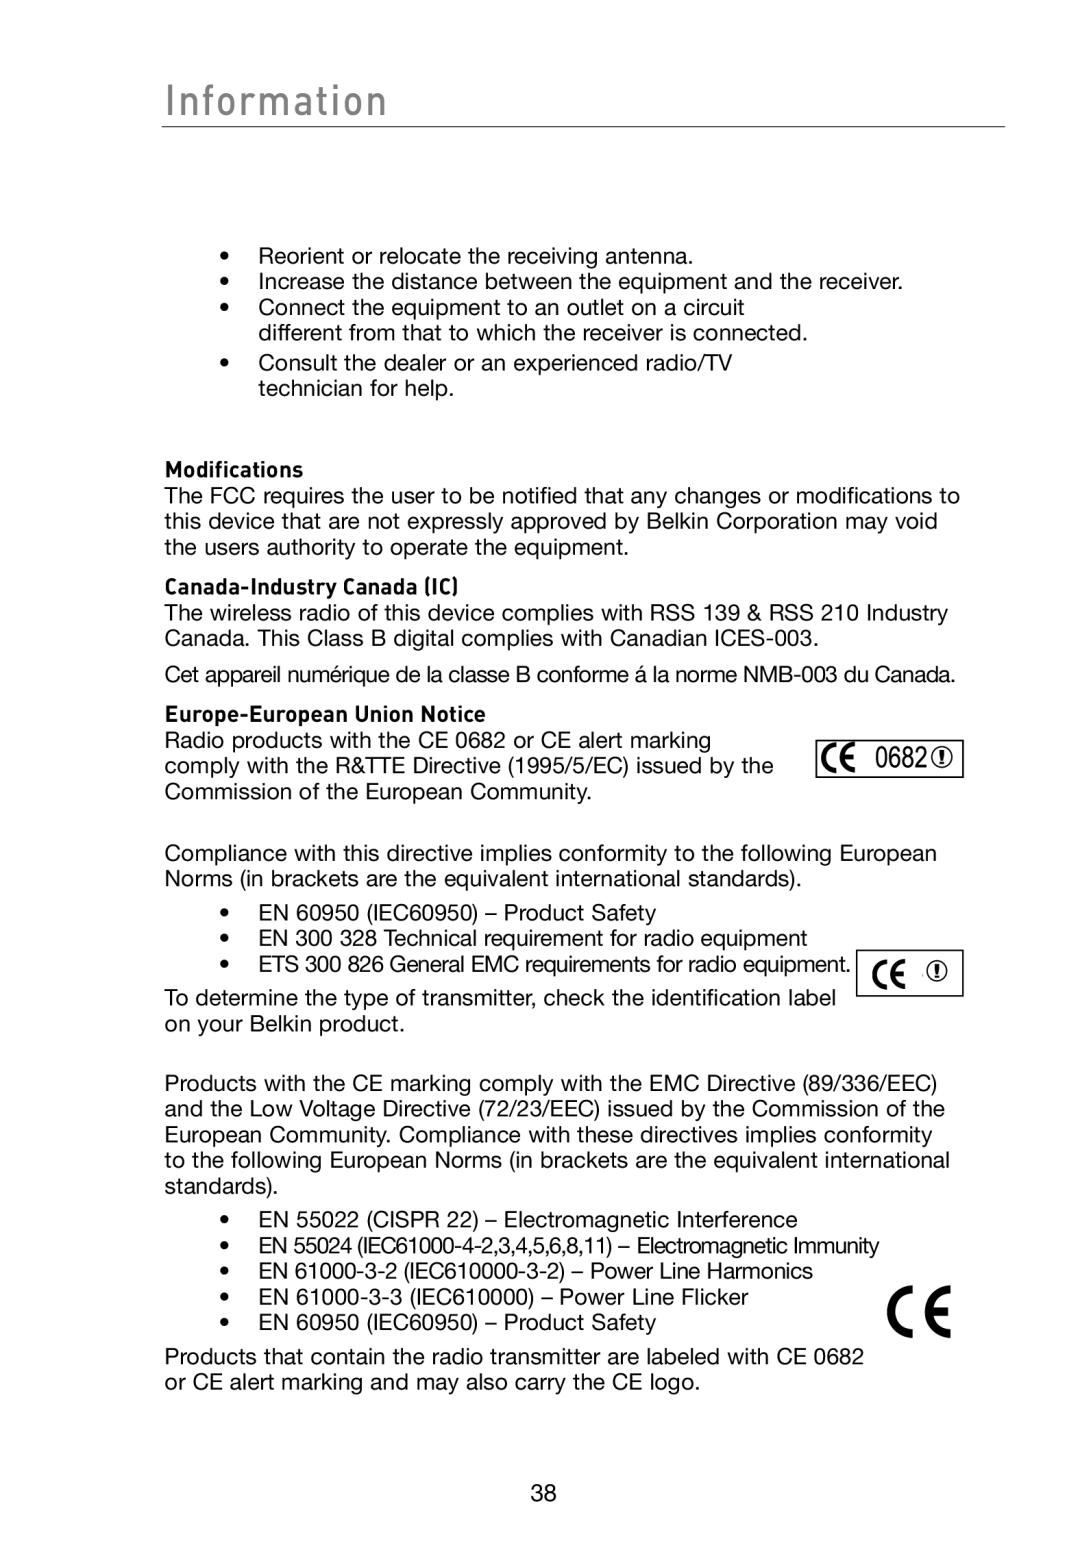 Belkin P74845UK manual Information, Modifications, Canada-Industry Canada IC, Europe-European Union Notice 